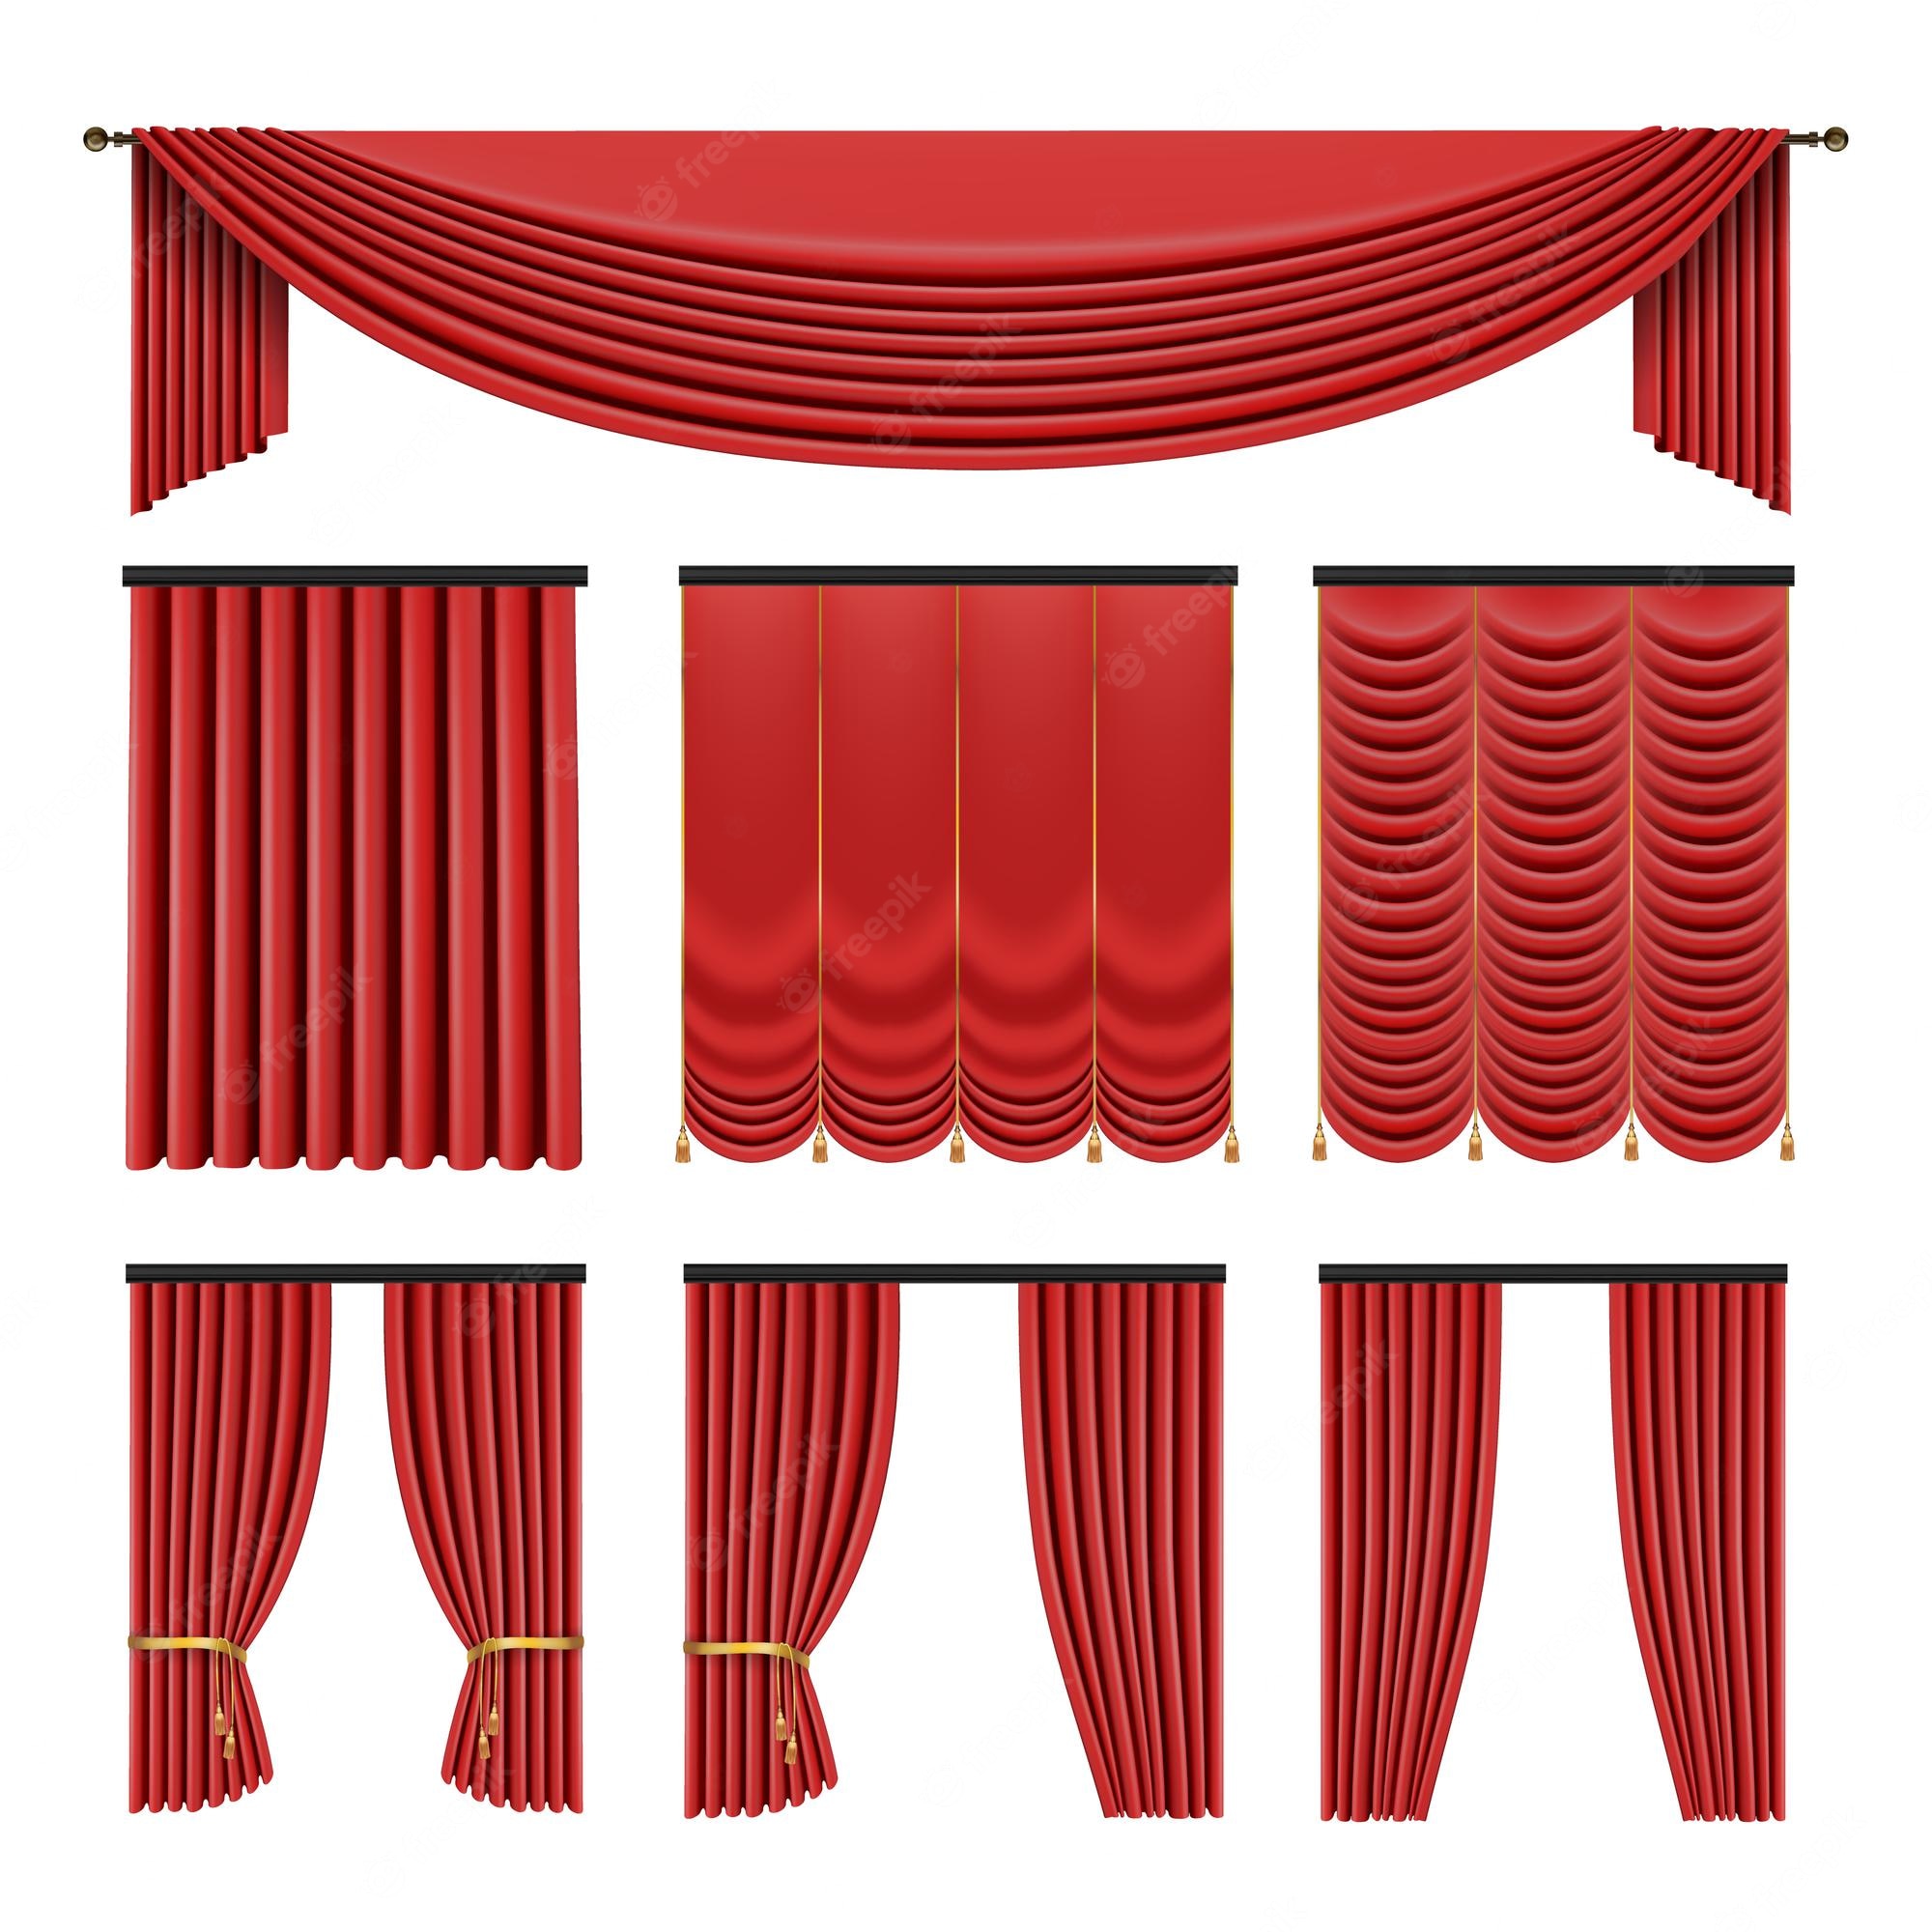 classic curtains